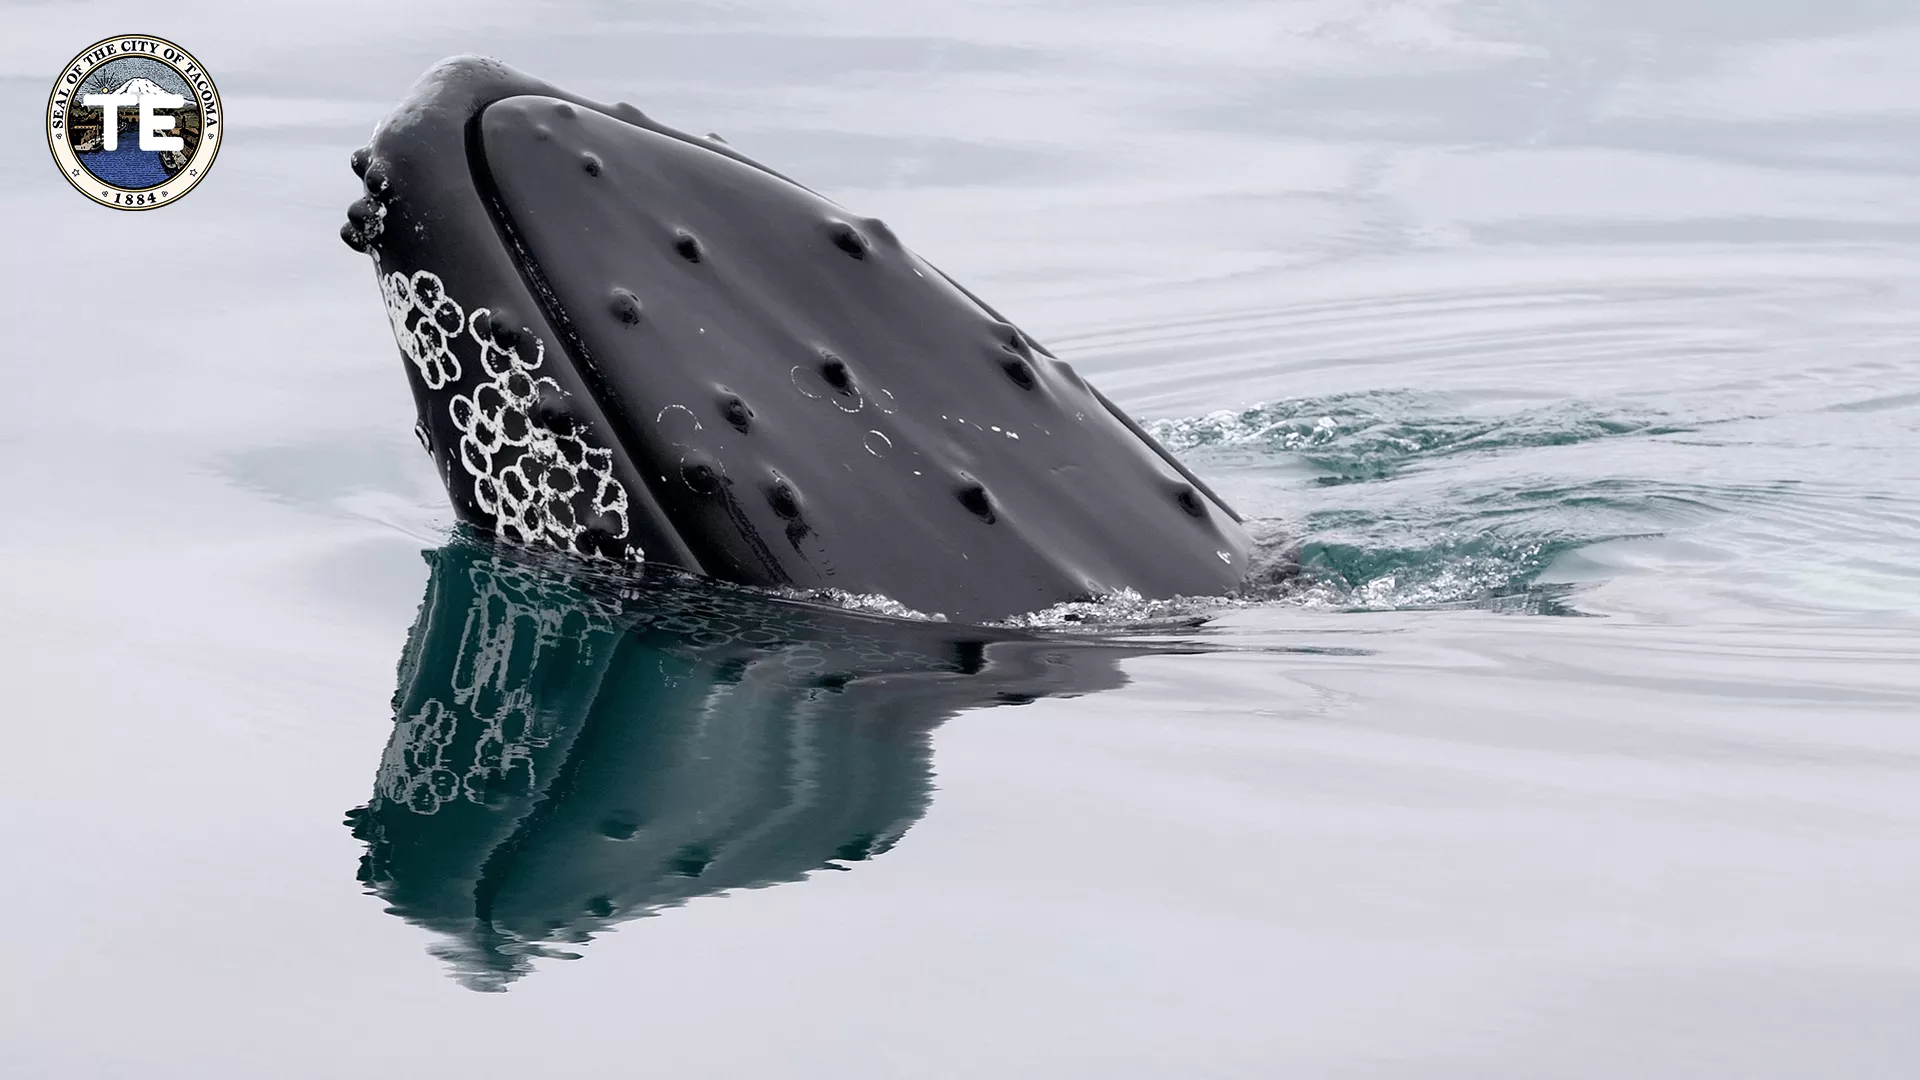 Puget Sound's Innovative Whale Protection Program